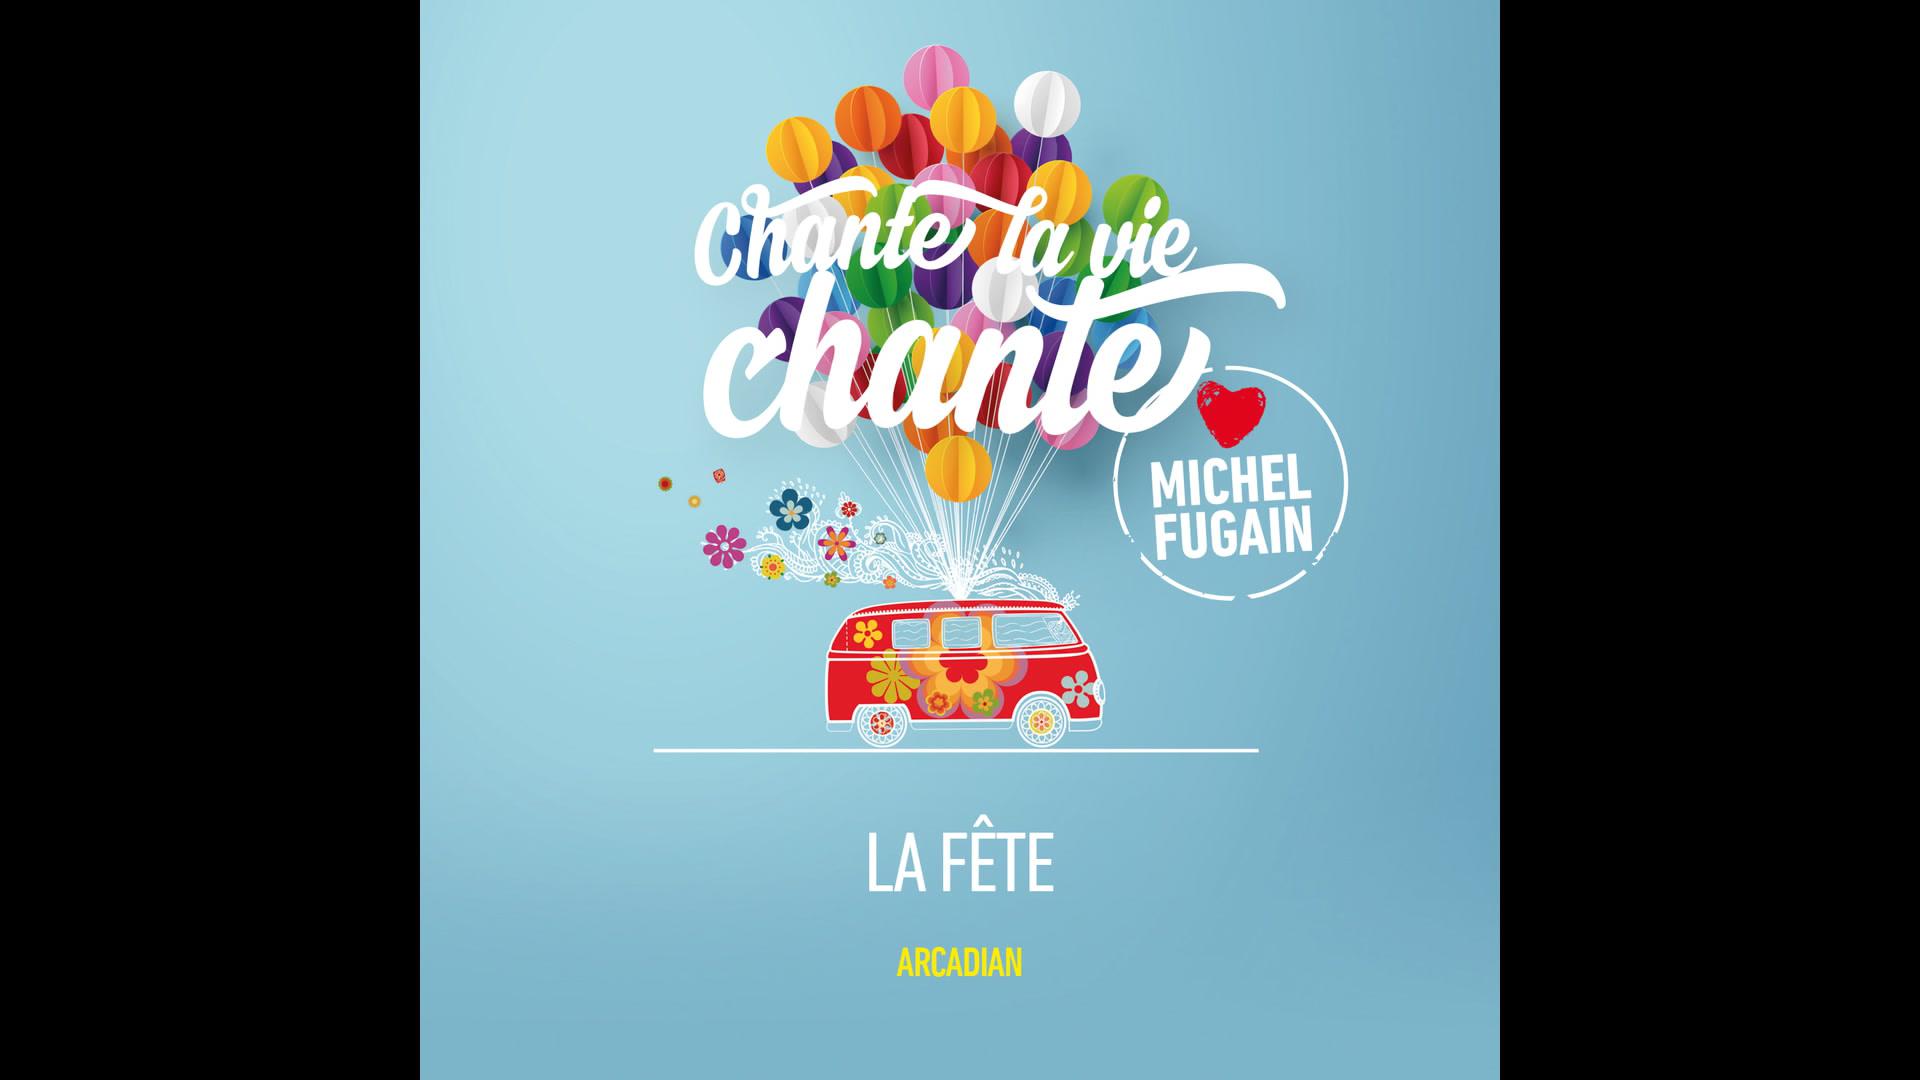 Arcadian - La fête (Love Michel Fugain) (Audio)